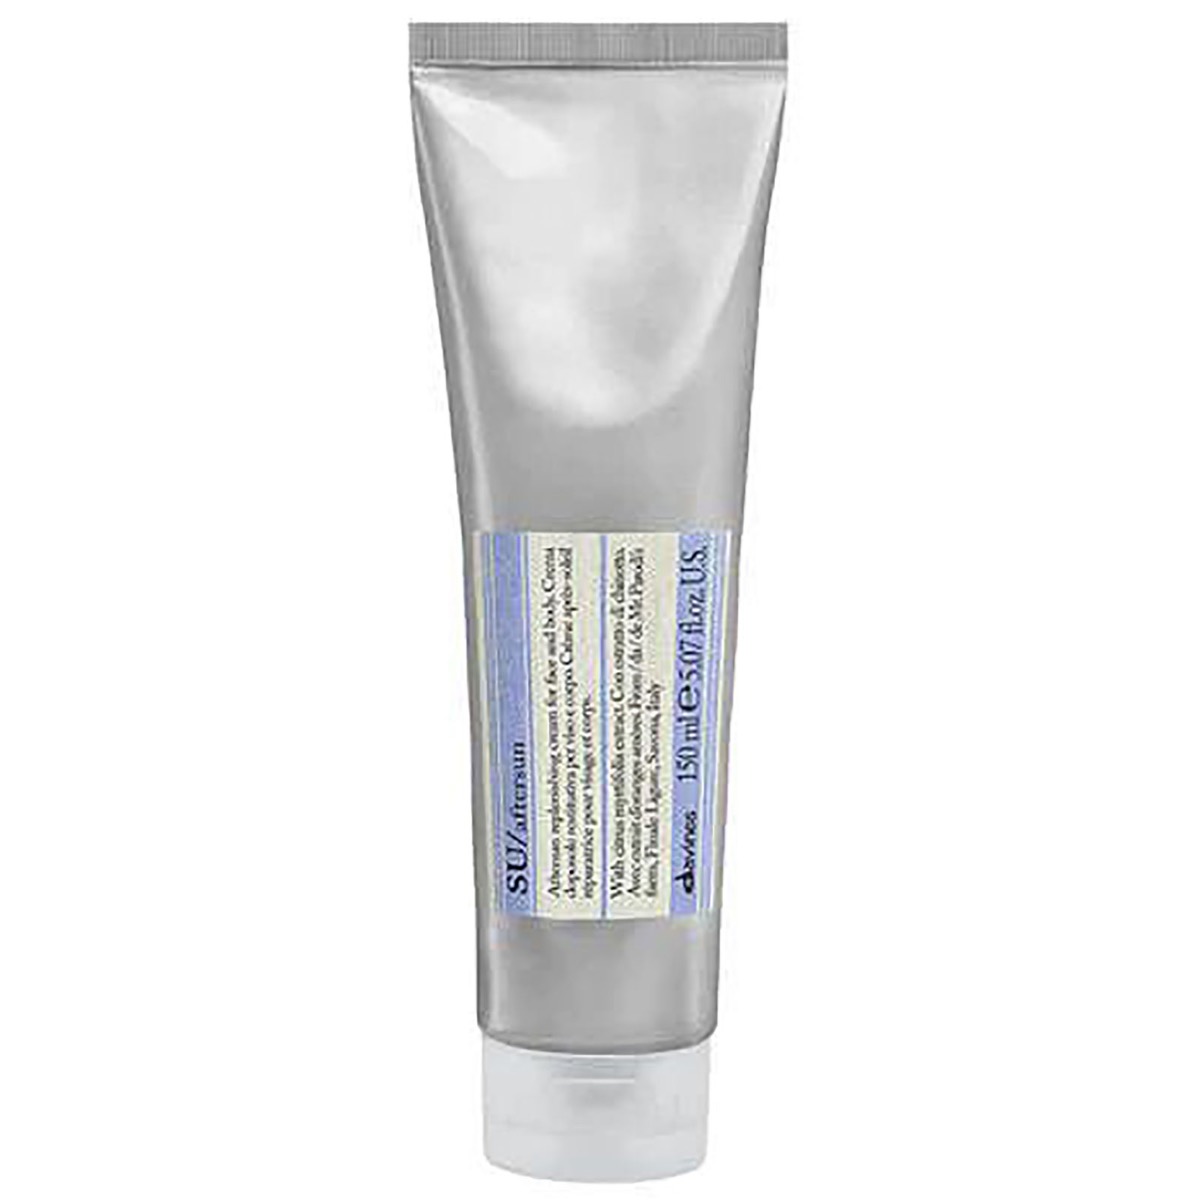 Davines - Protective Sun Cream - SPF30 - 100 ml